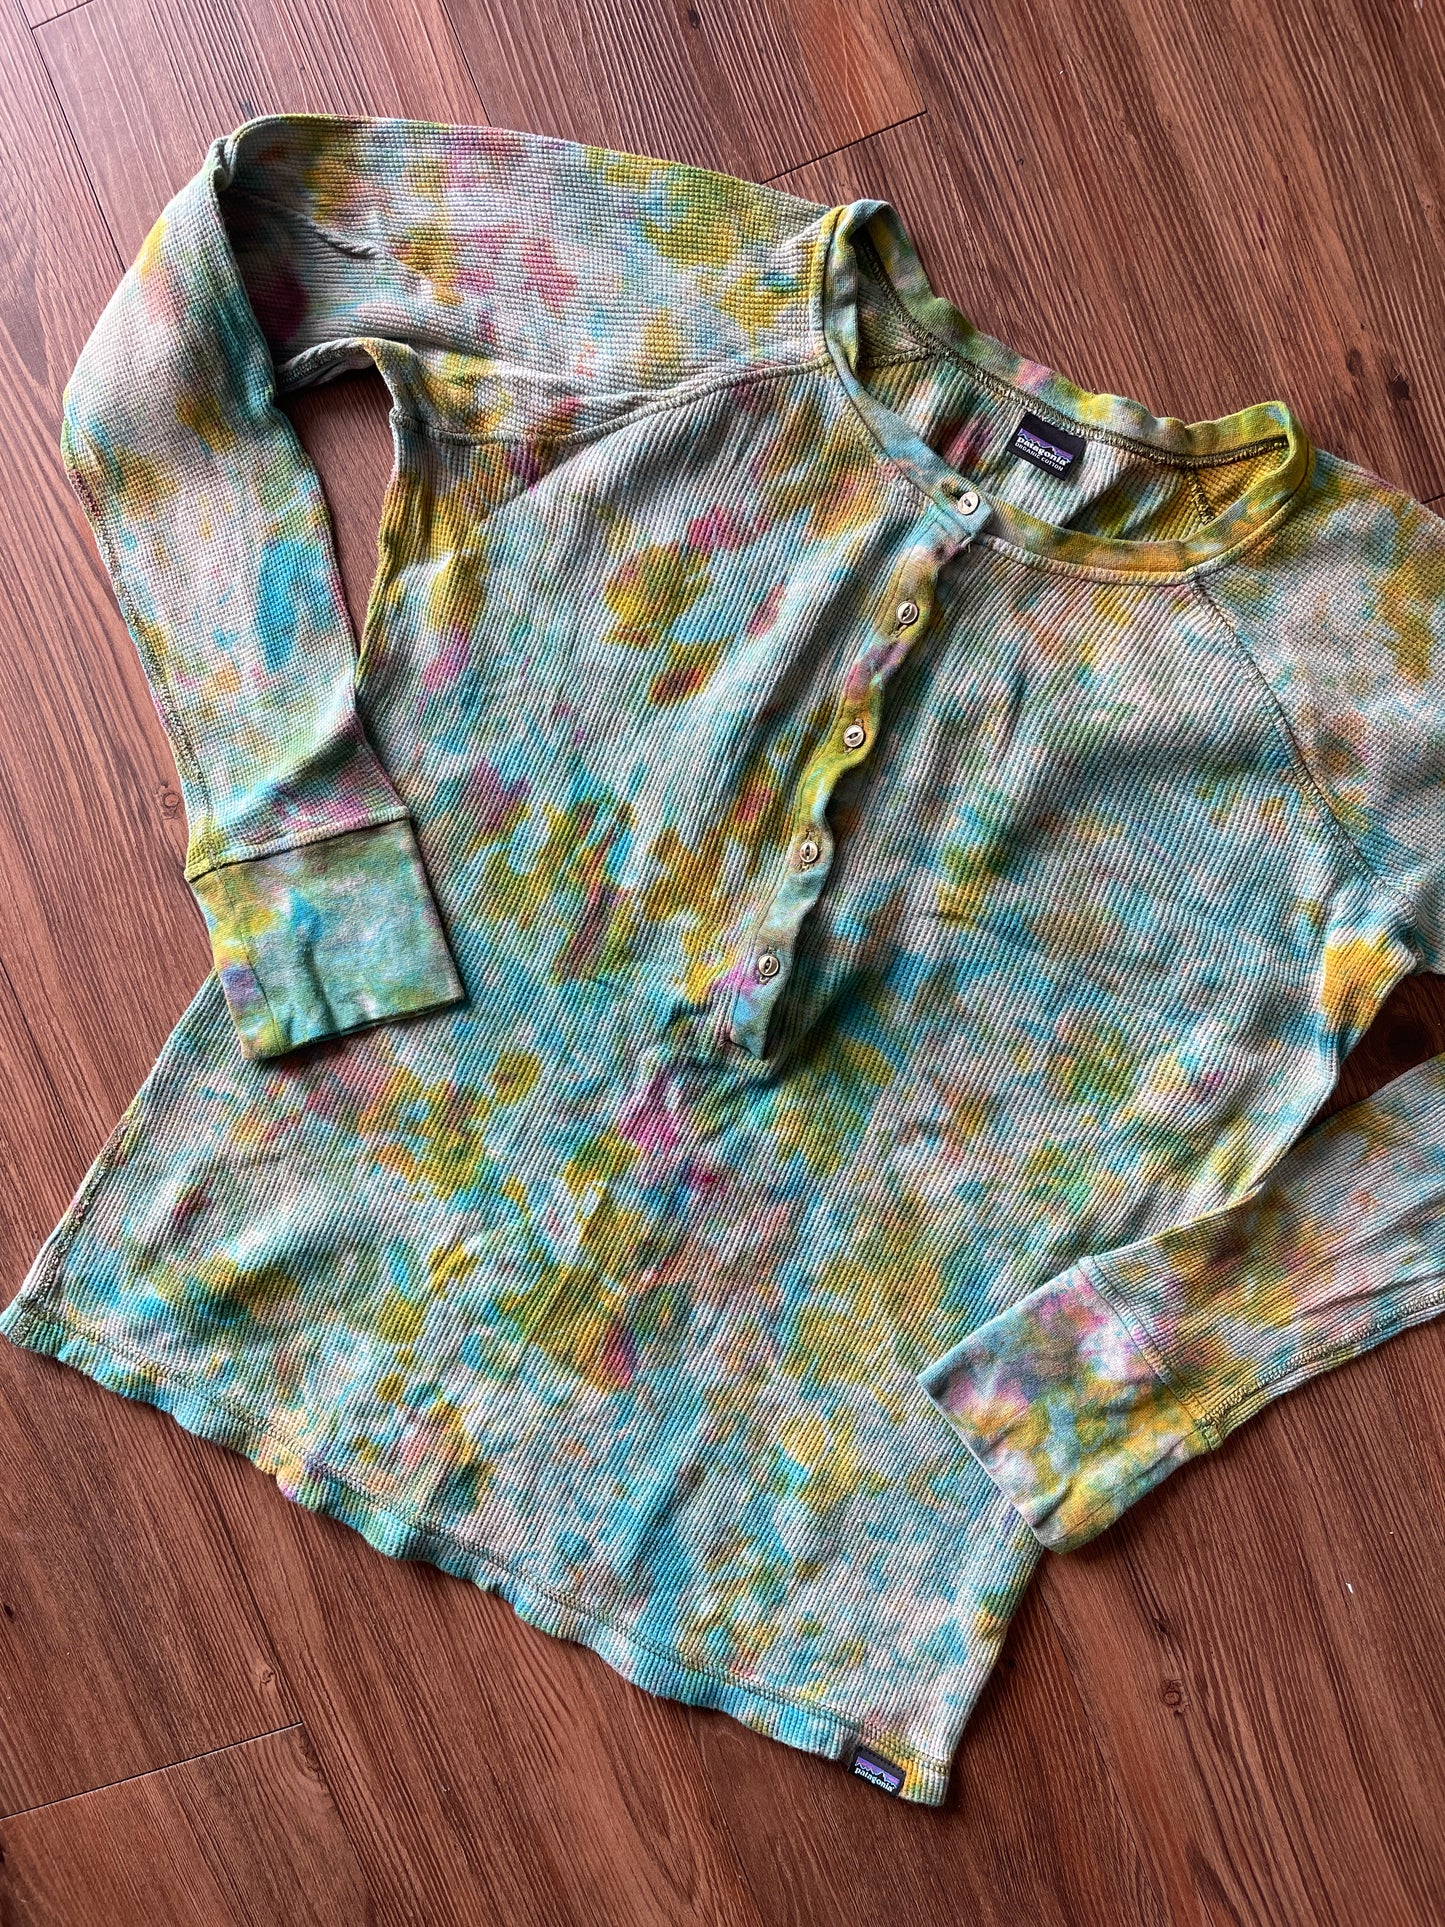 Medium Women's Patagonia Waffle Shirt | Green and Blue Tie Dye Long Sleeve